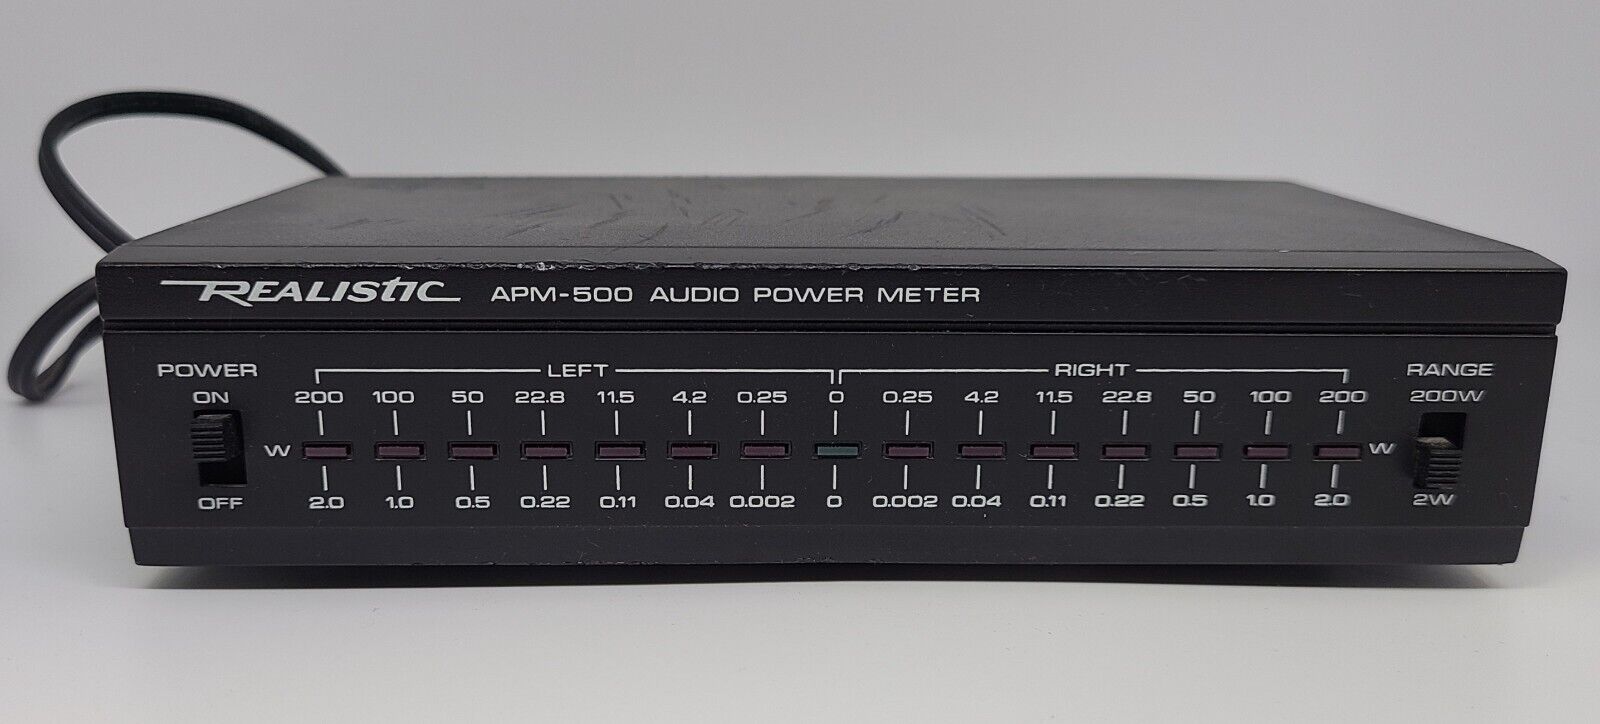 Vintage Realistic Audio Power Meter Apm-500 Model # 42-2107 - Tested Works Great